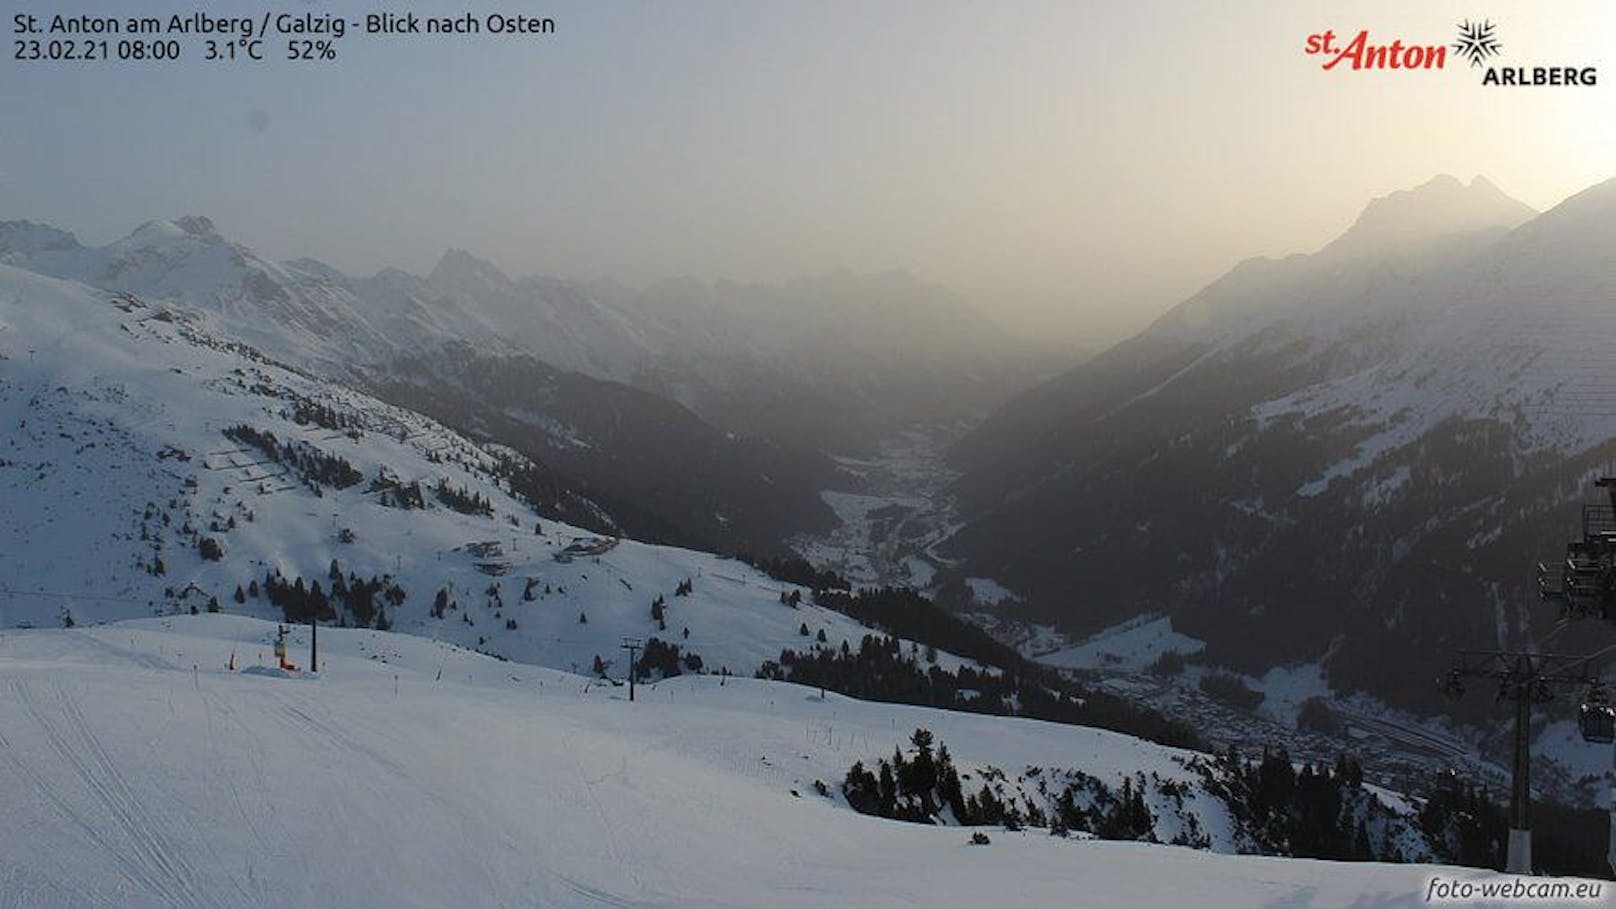 Webcam Sankt Anton am Arlberg heute in der Früh